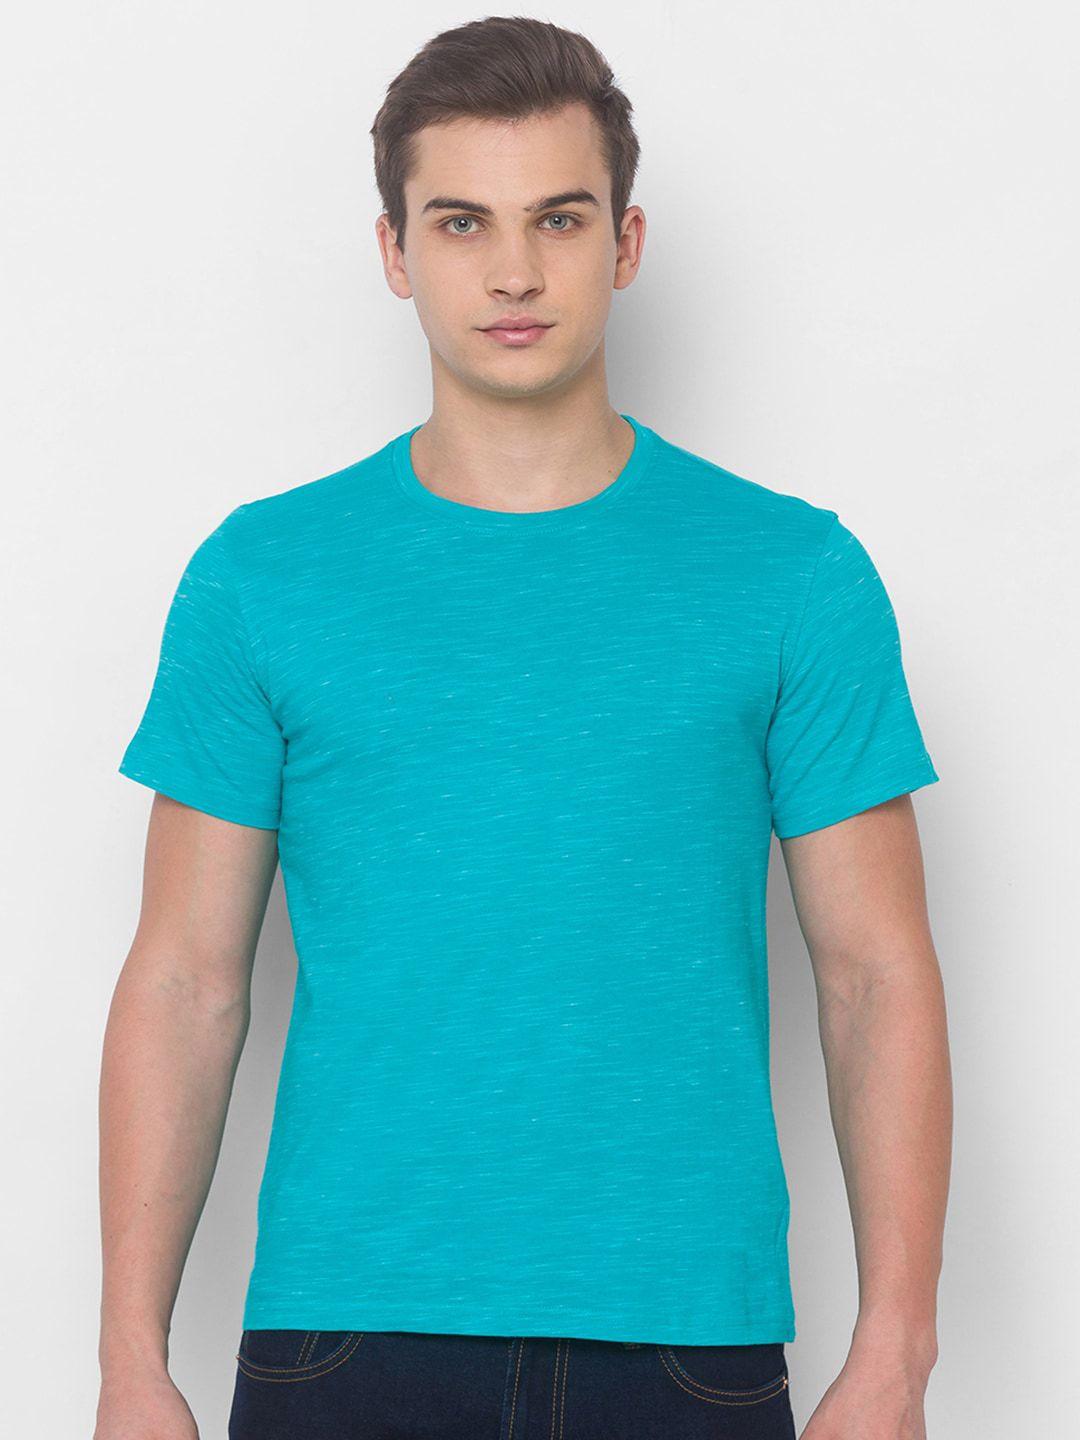 globus men turquoise blue t-shirt